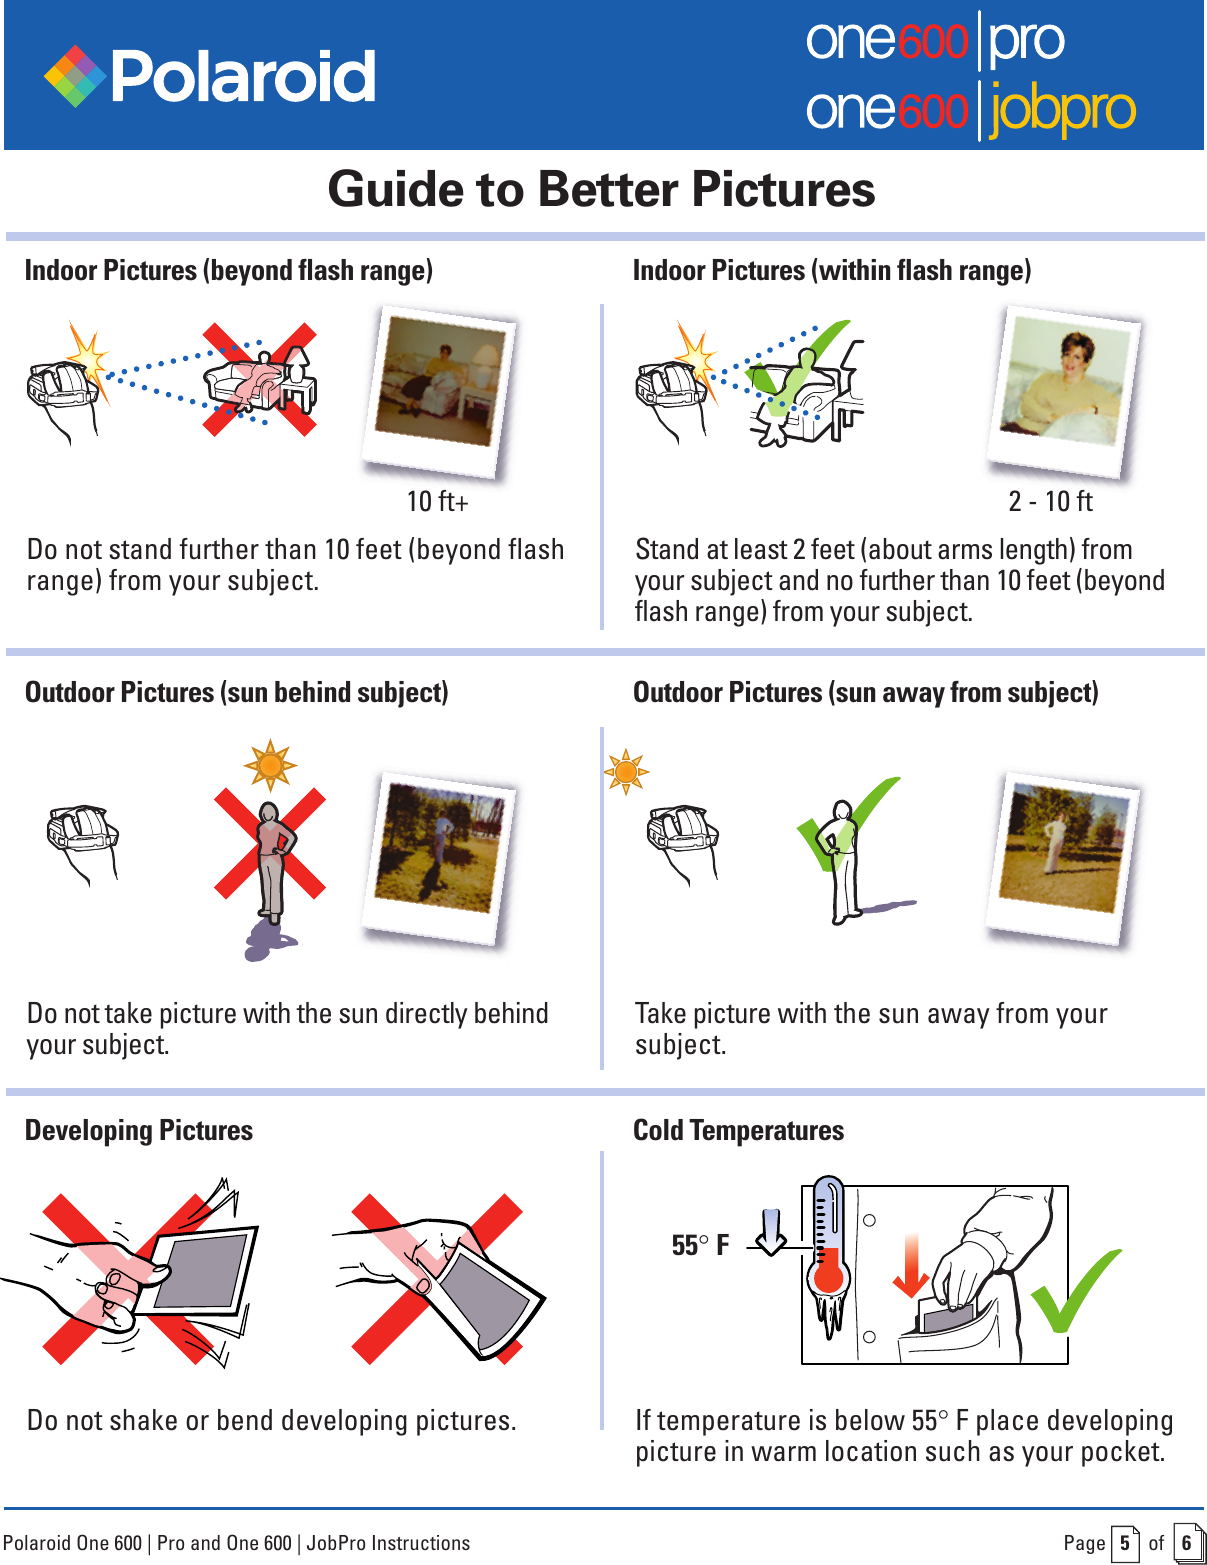 Page 5 of 6 - Polaroid Polaroid-One-600-Jobpro-Operating-Instructions- One600 Pro/JobPro User Guide  Polaroid-one-600-jobpro-operating-instructions